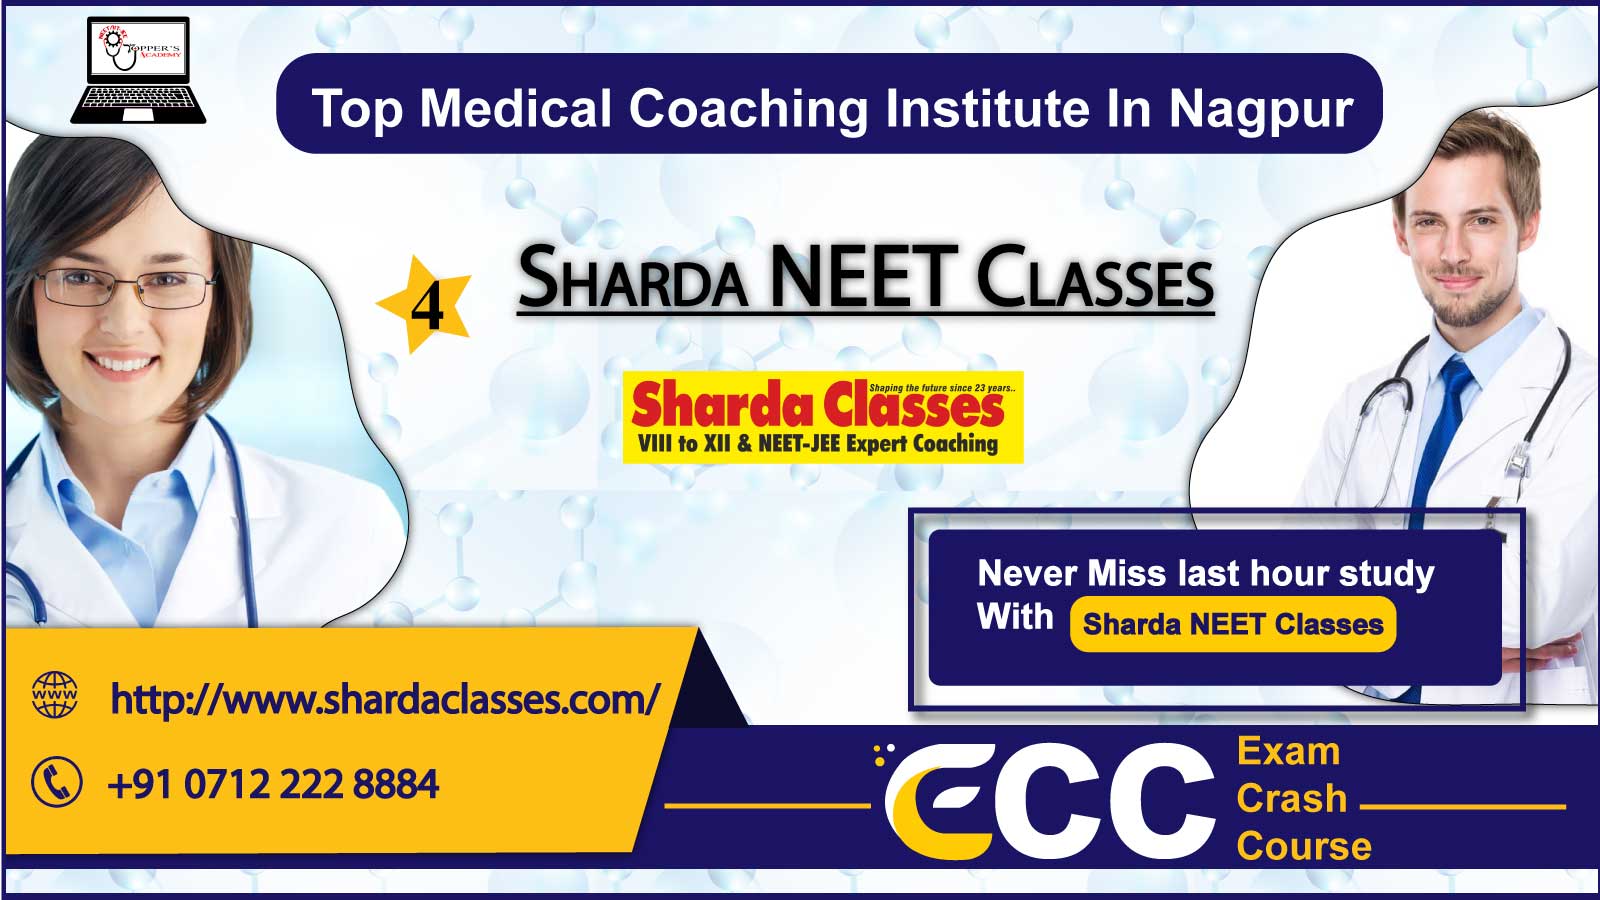 Sharda NEET Classes in Nagpur